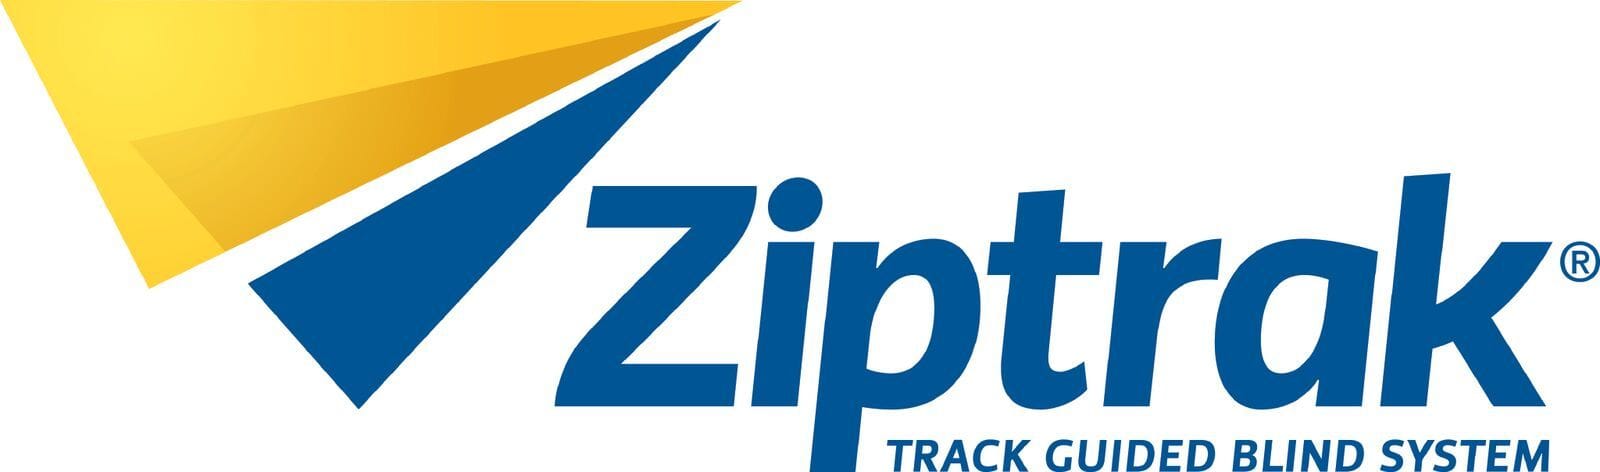 Ziptrak Track Guided Blind System | Custom Blinds & Shutters Gold Coast